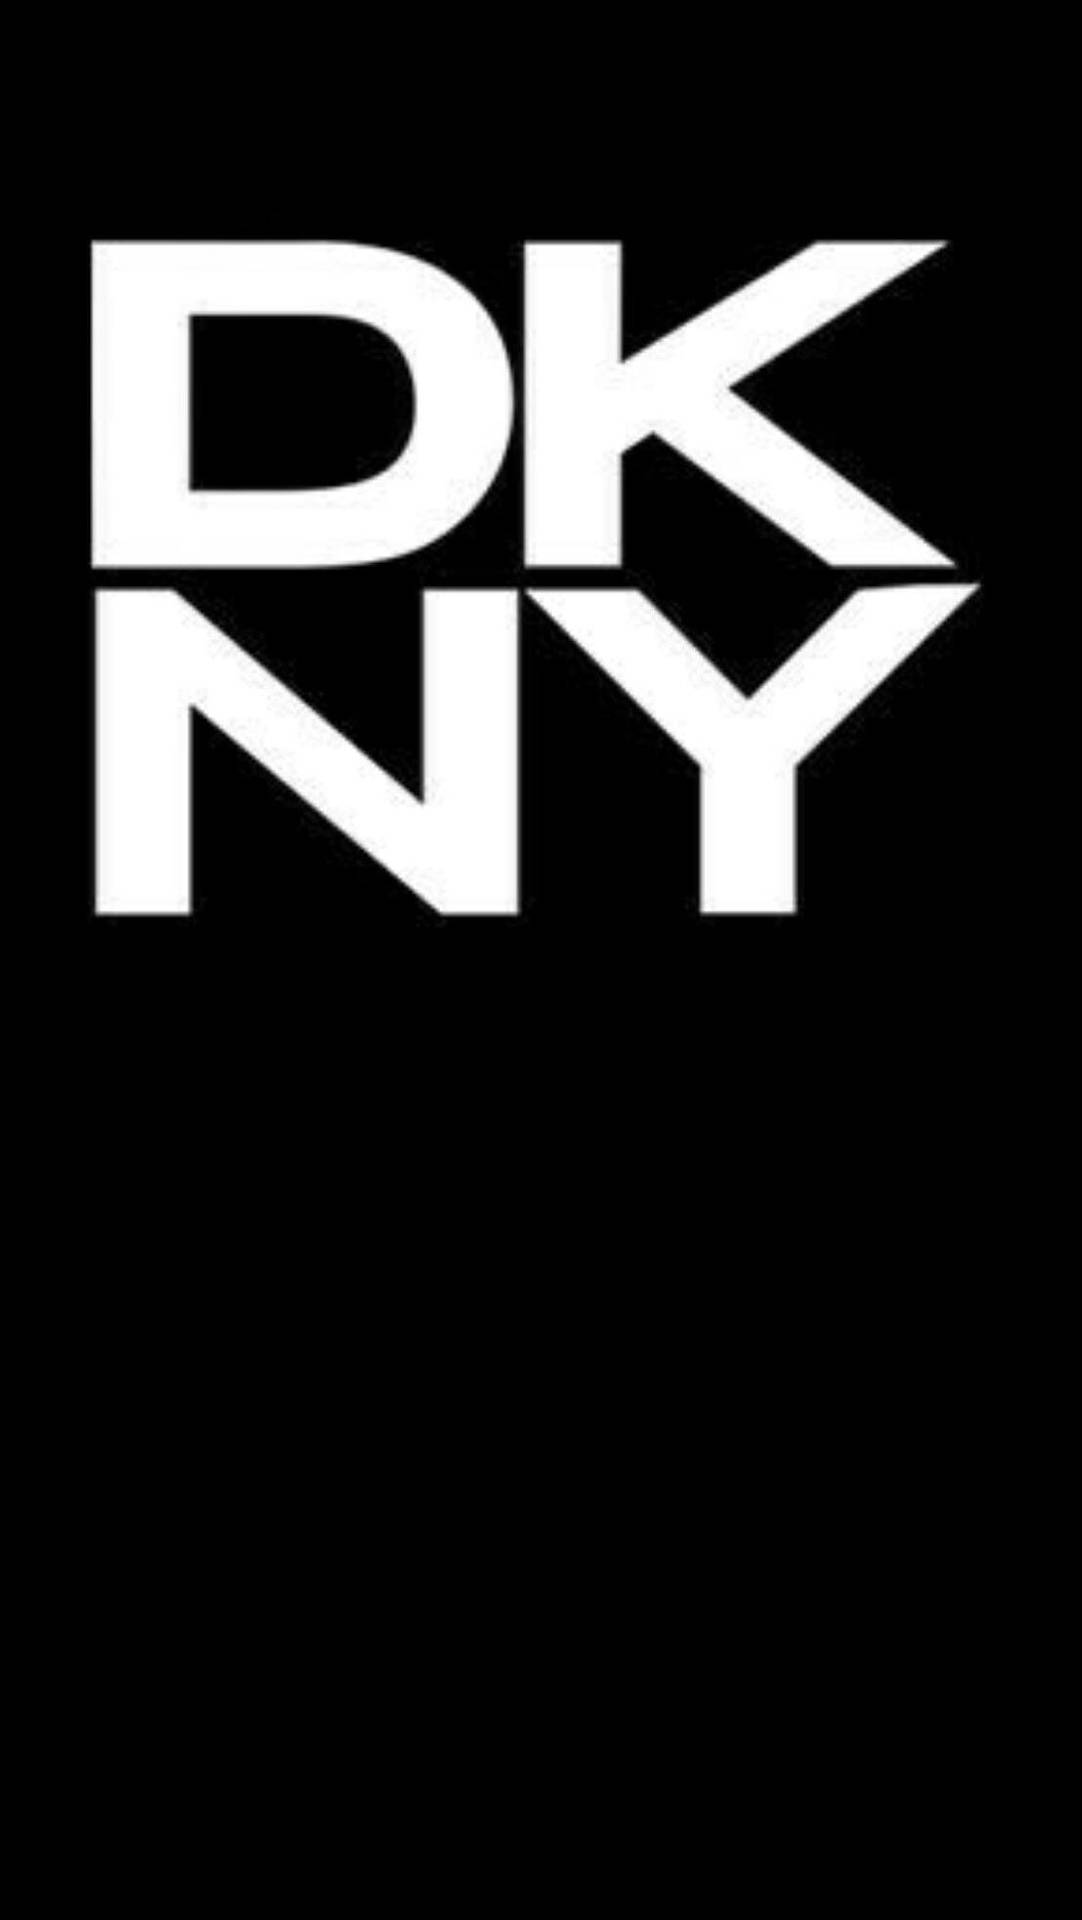 Black And White DKNY Logo Wallpaper